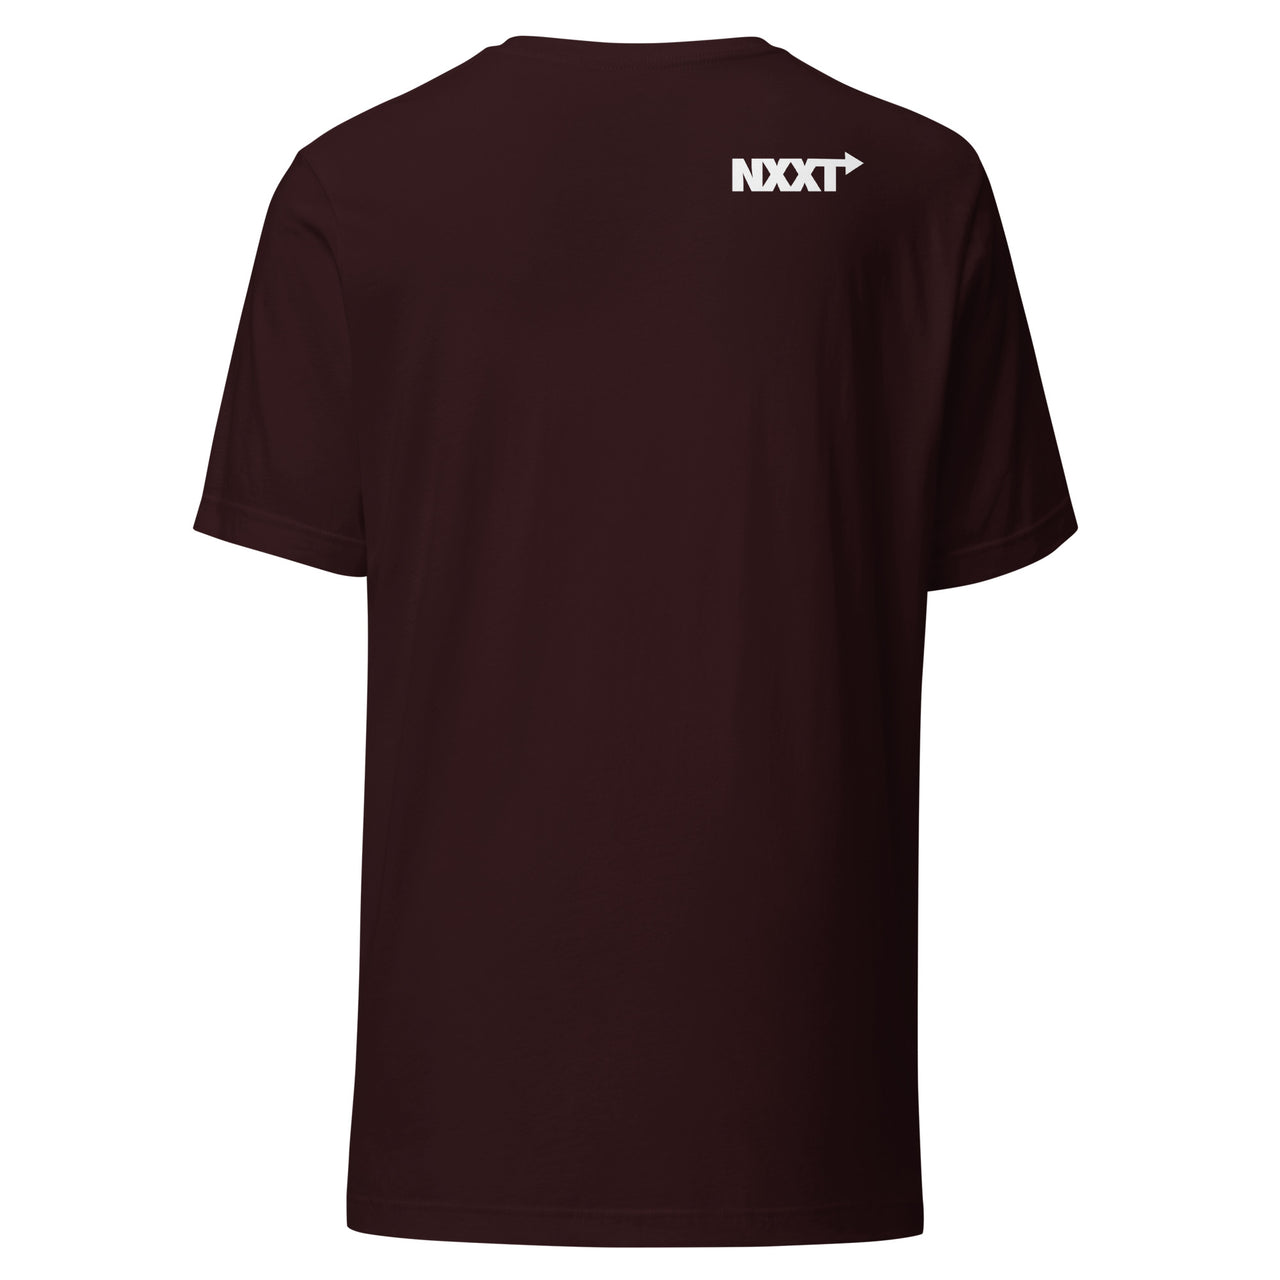 NXXT Red Eye Lion Unisex t-shirt - Shady Lion Coffee Co.